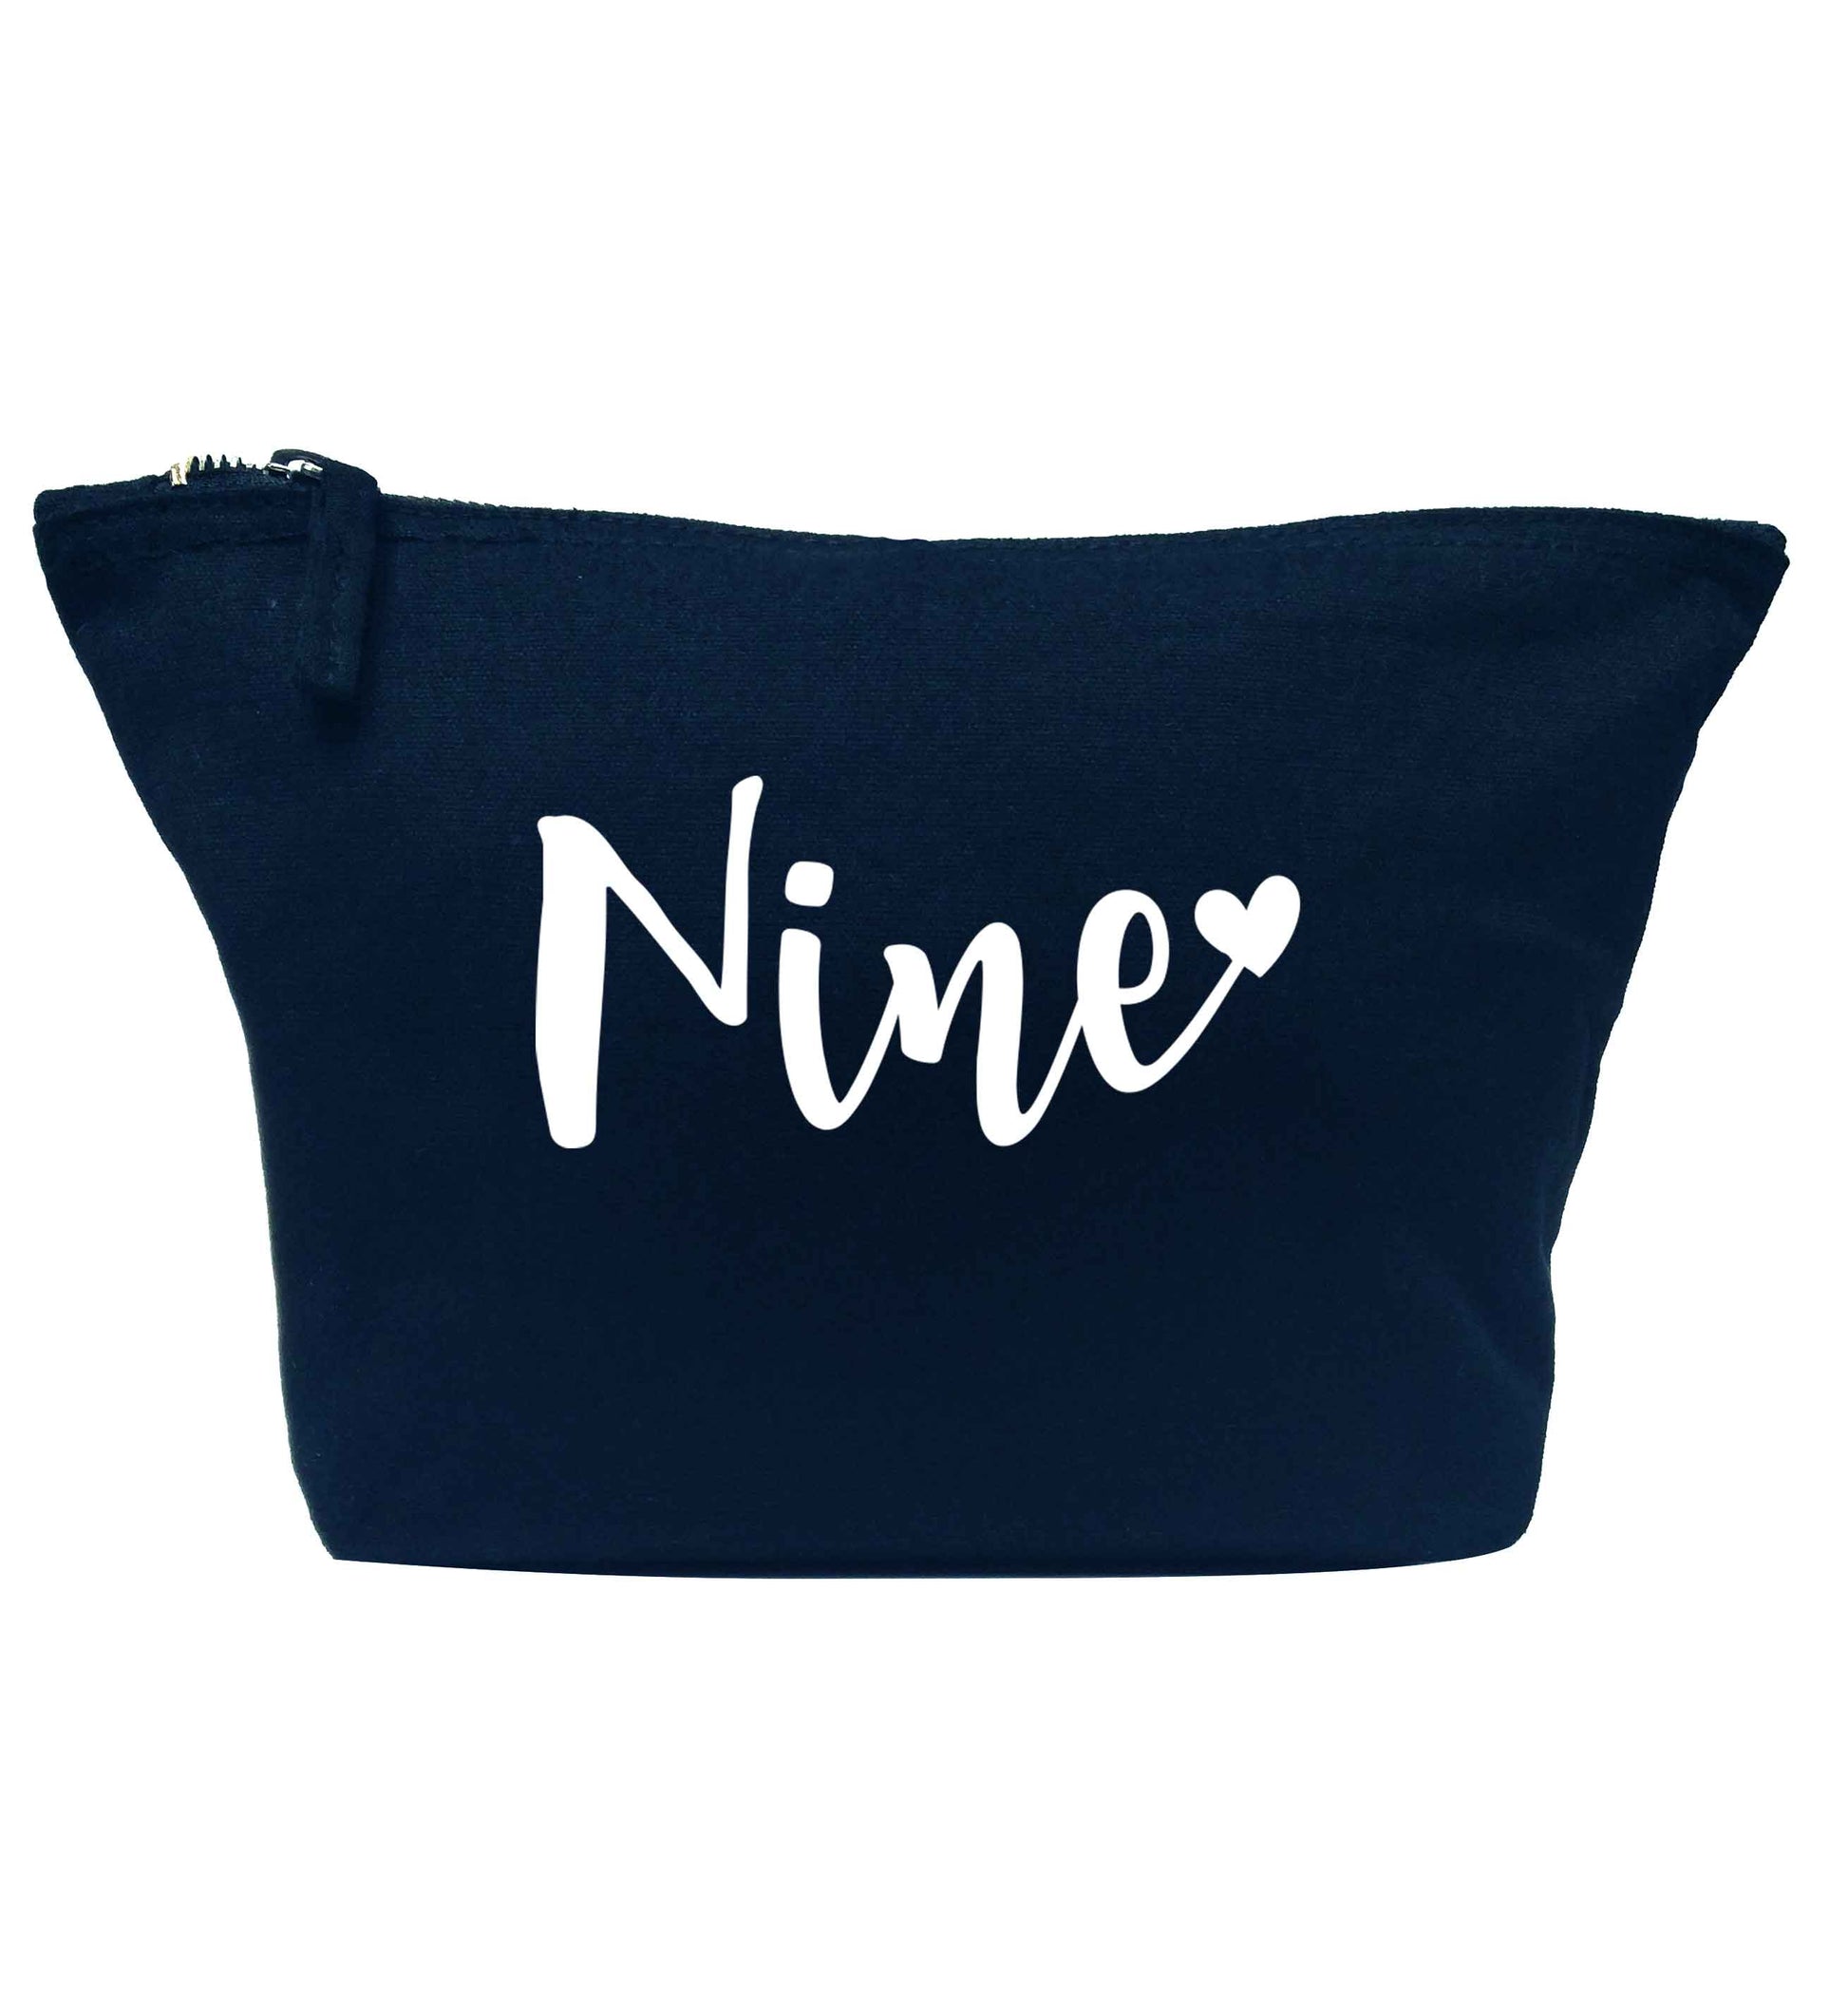 Nine and heart navy makeup bag